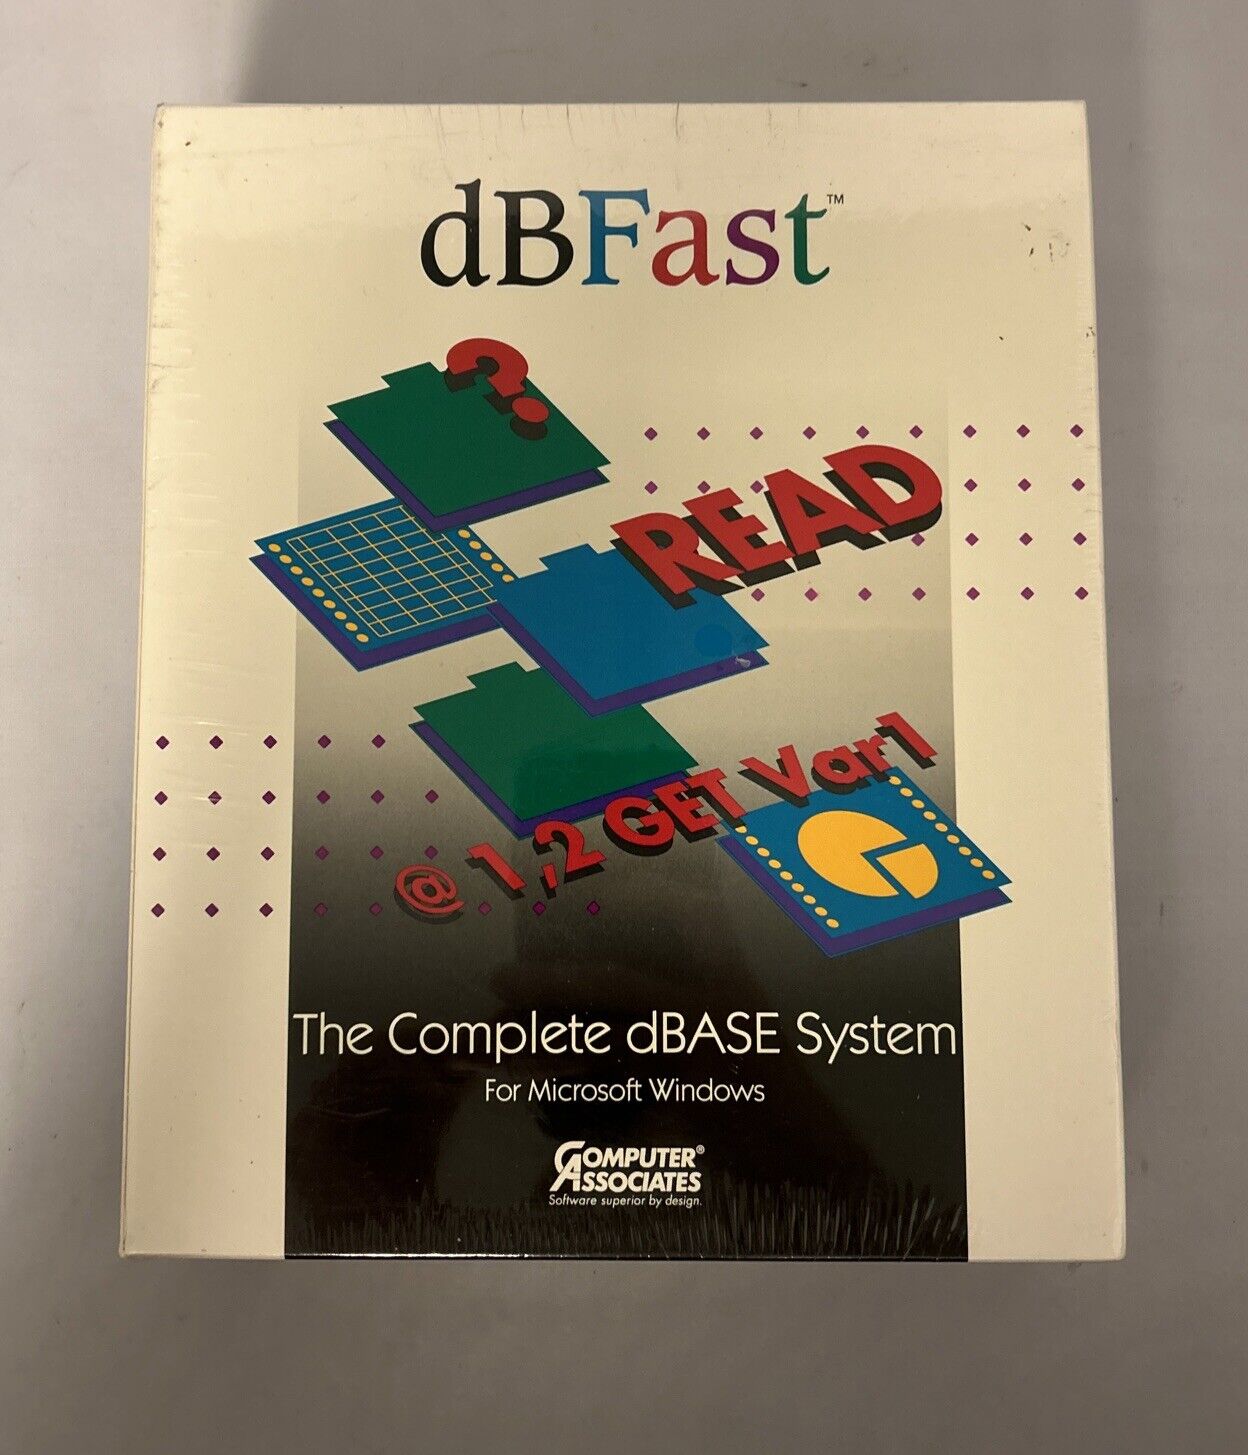 Computer Associates dBFast Version 1.7 1991 Vintage Computer Software